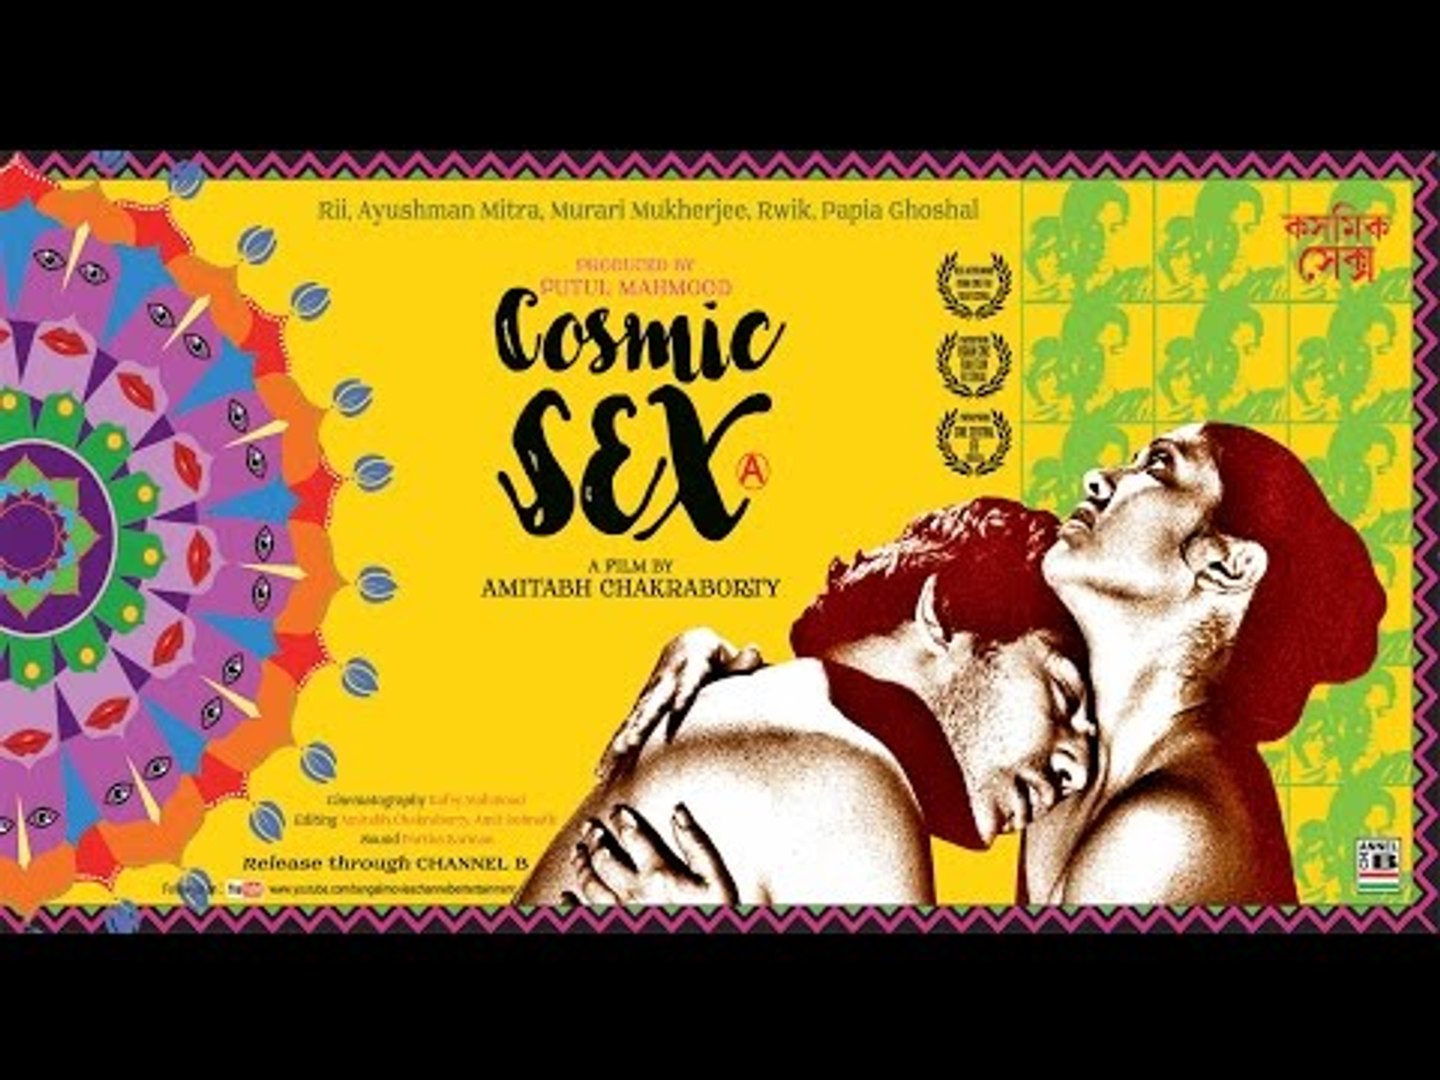 Cosmic sex